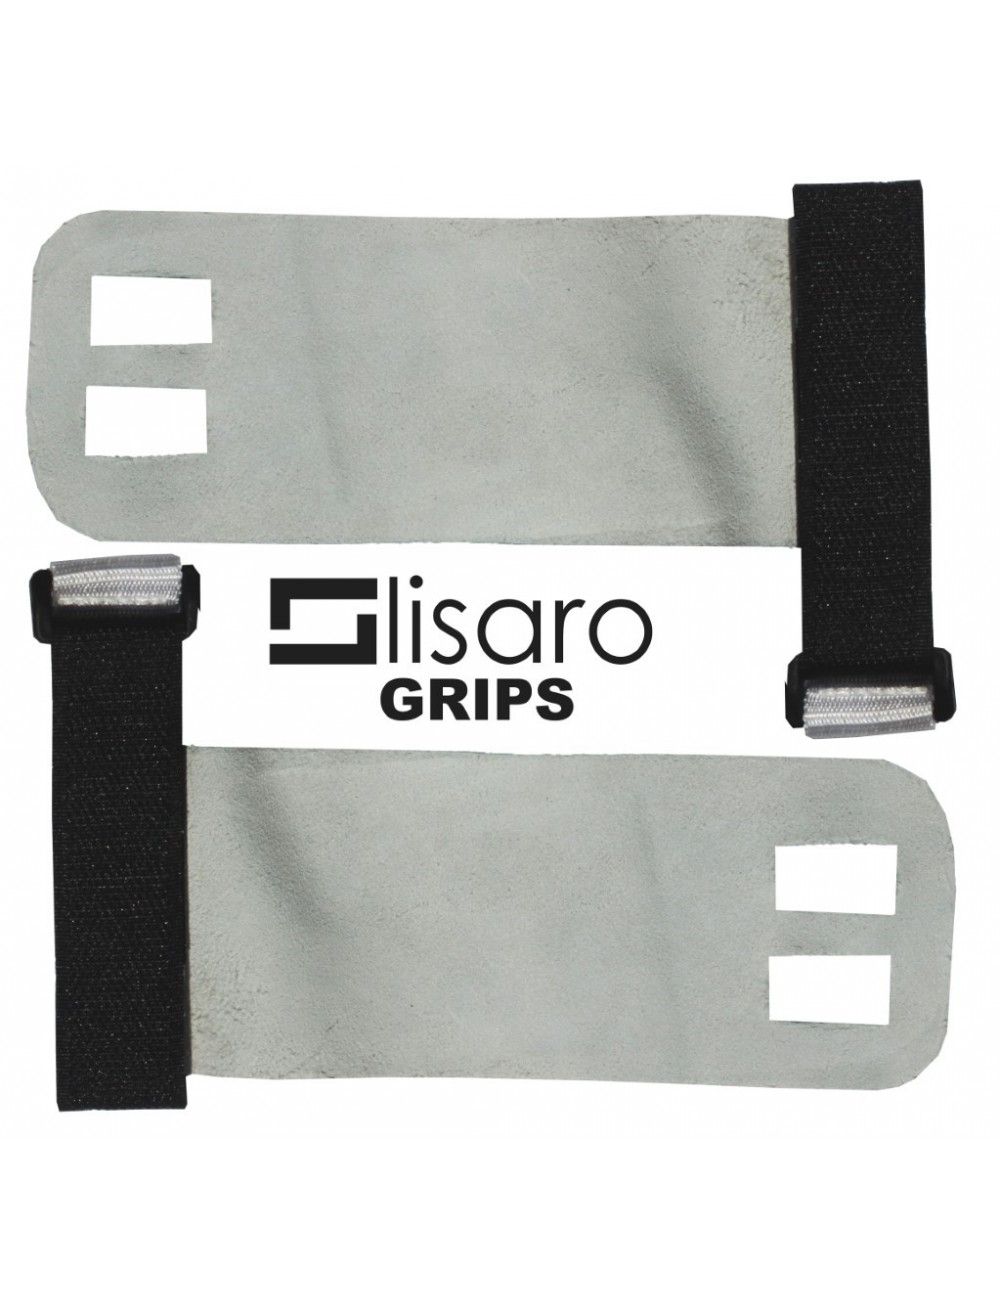 LISARO Pull Up Grips, Hand Grips, (Grip Wunder) – der Extra Starke Handschutz Fürs Training, Fitness, Freeletics, Calisthenics -